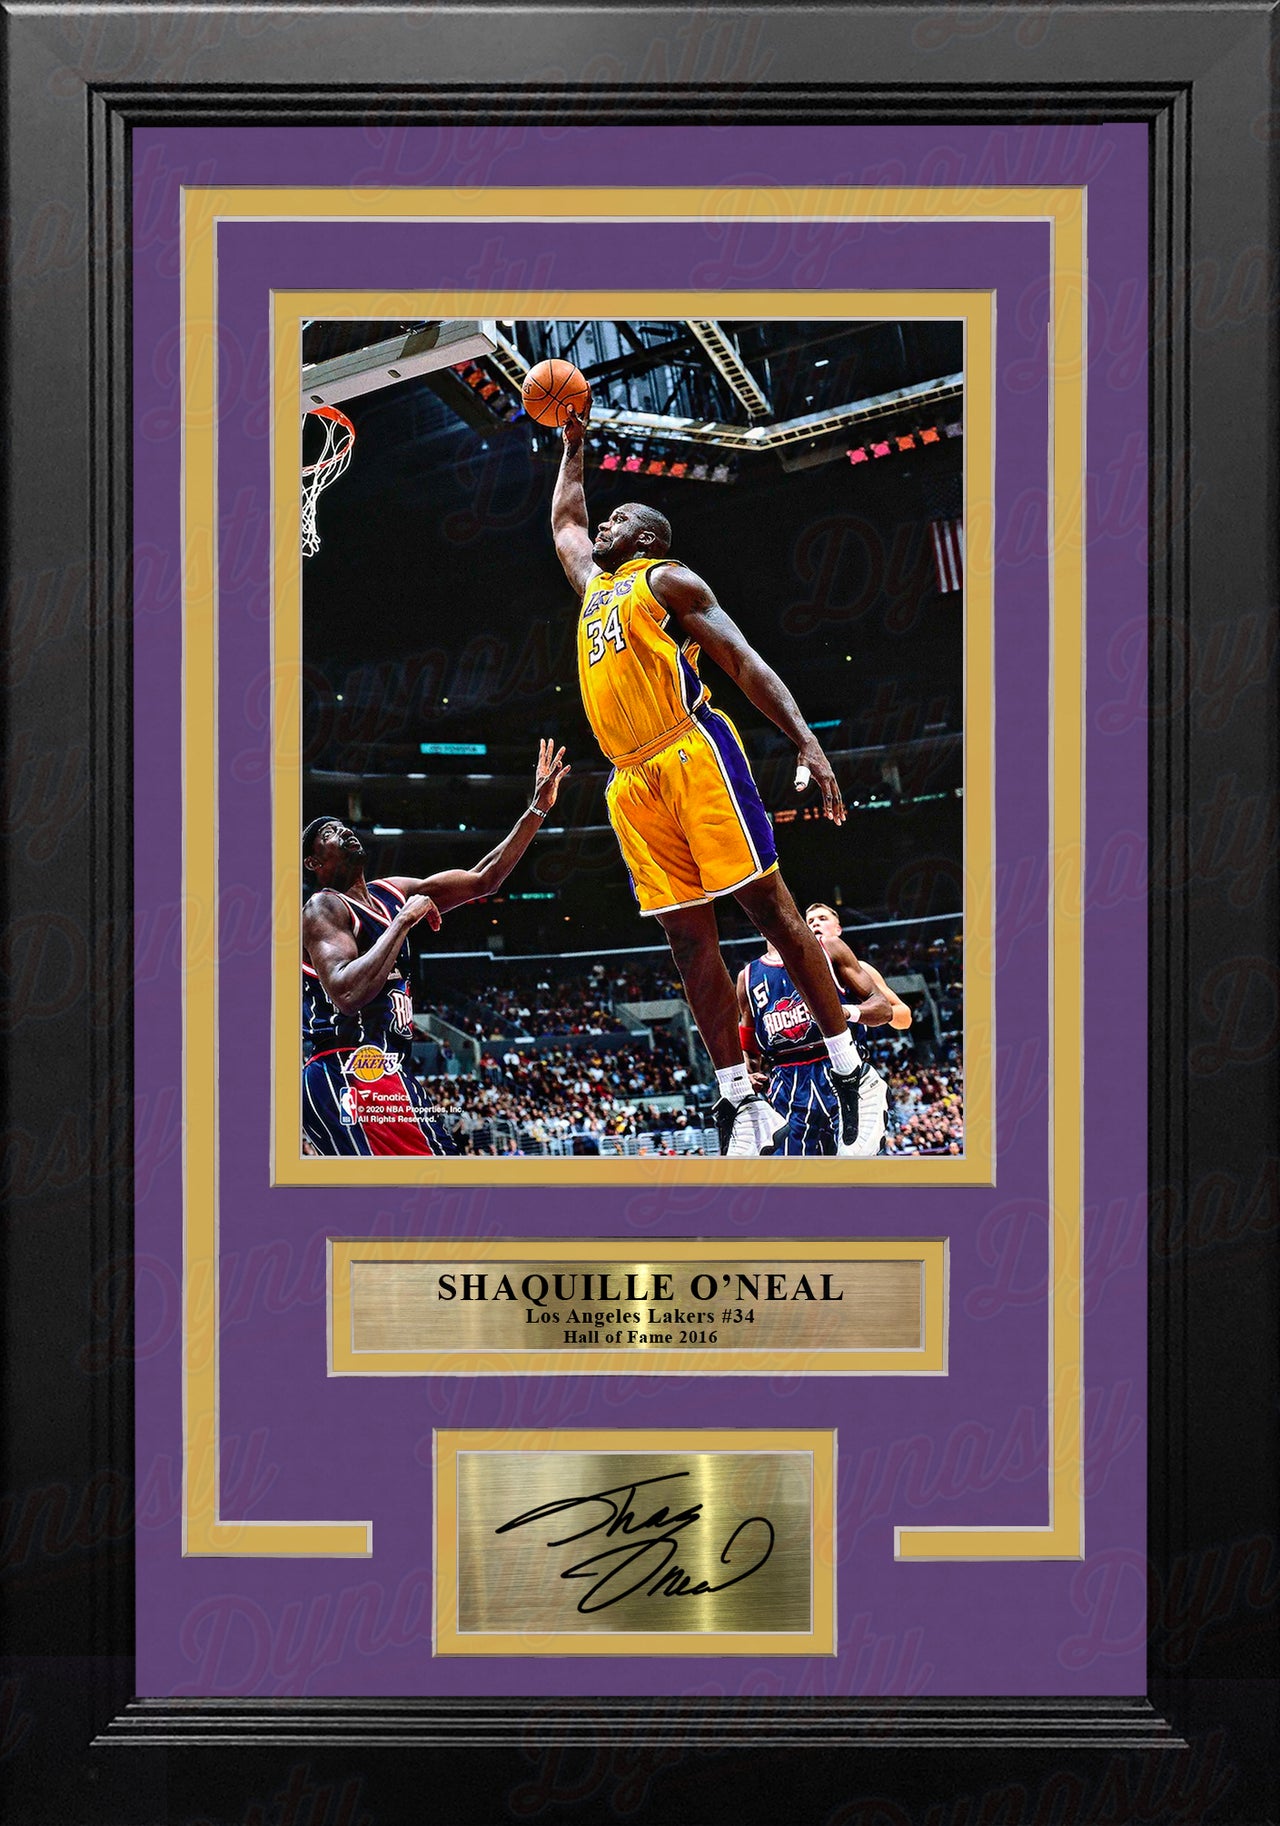 Kobe Bryant Framed 8x10 Lakers Dunk Photo w/Laser Engraved Signature